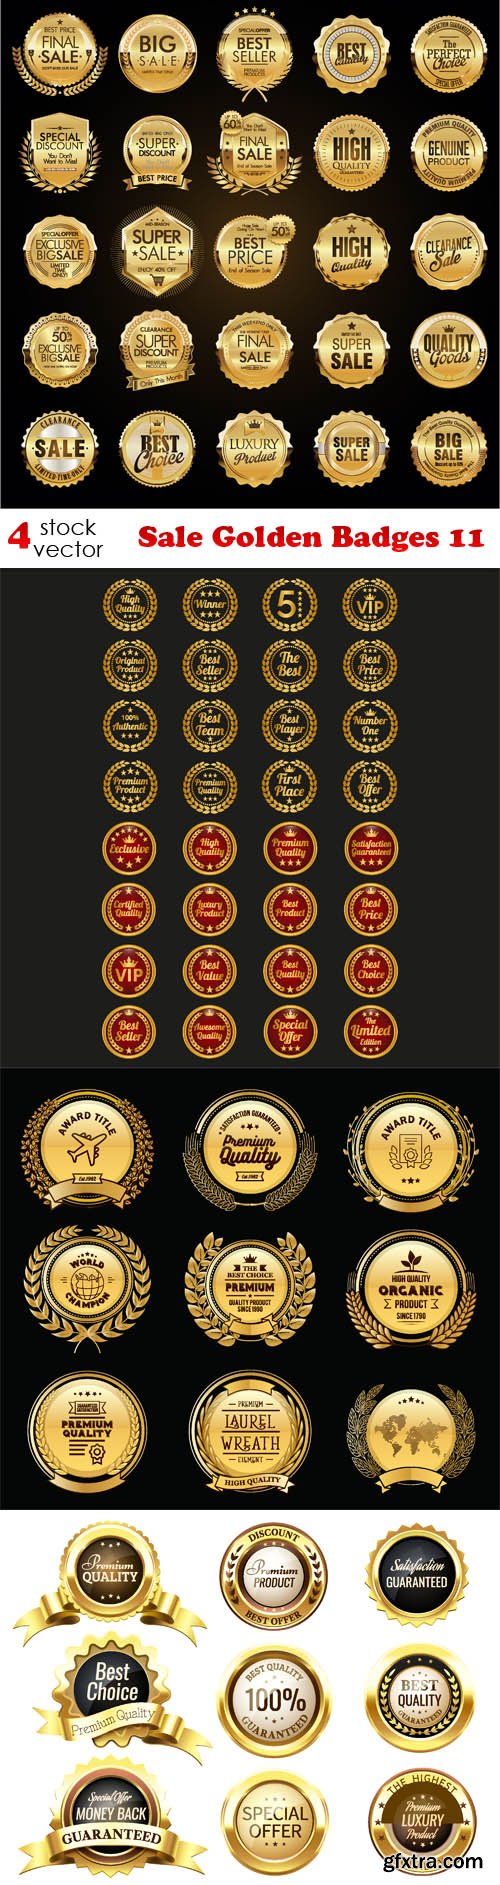 Vectors - Sale Golden Badges 11